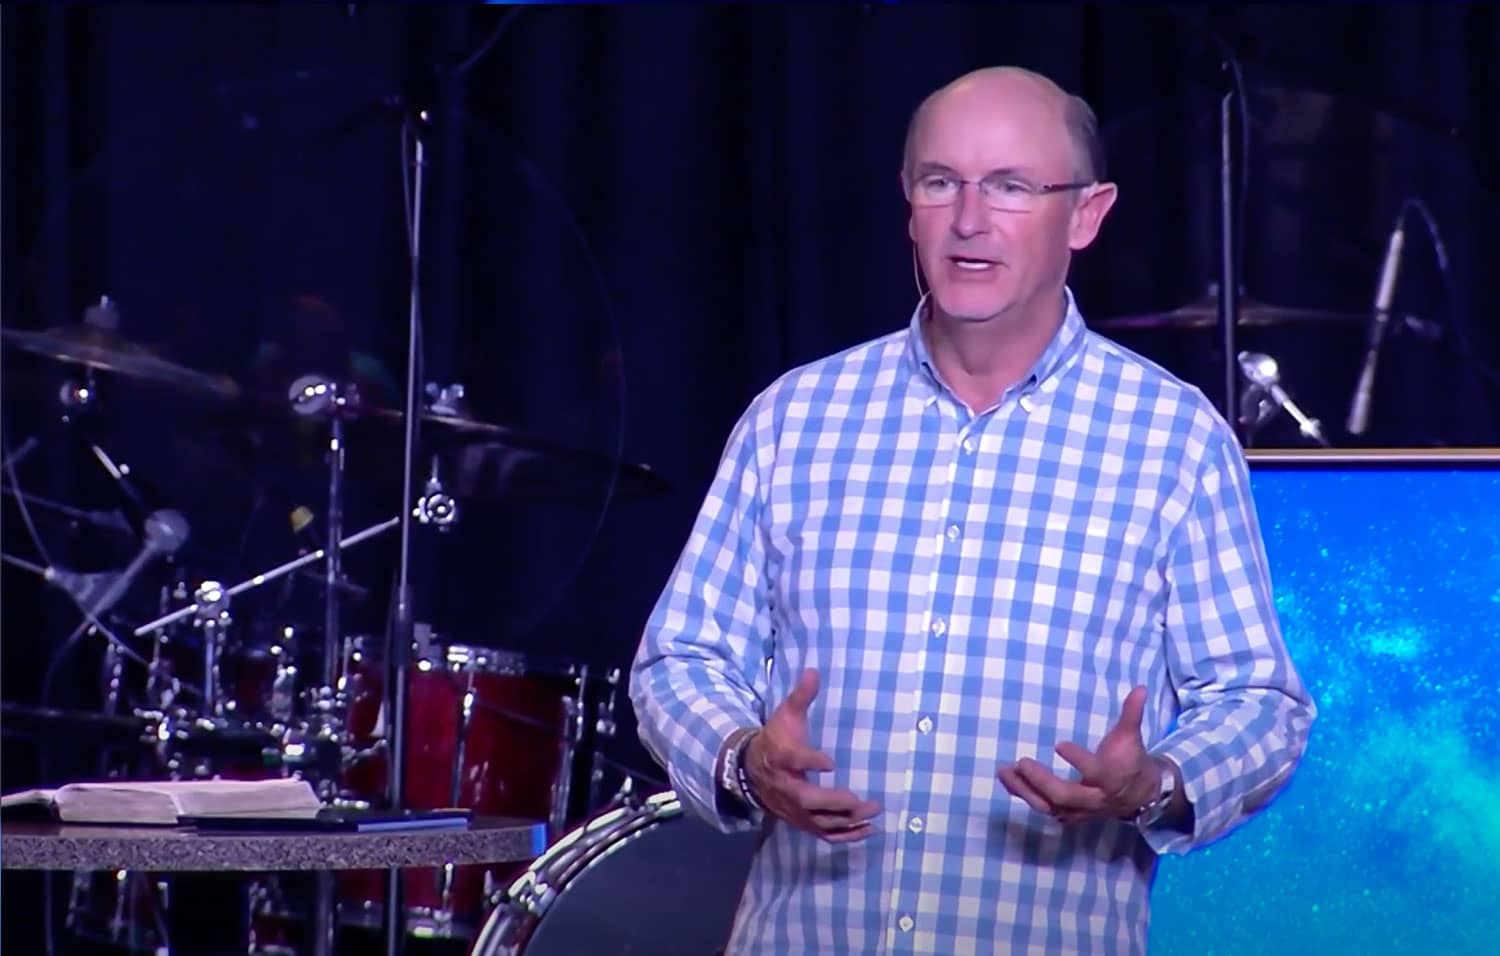 Daniel Henderson speaks about Christians honoring leaders